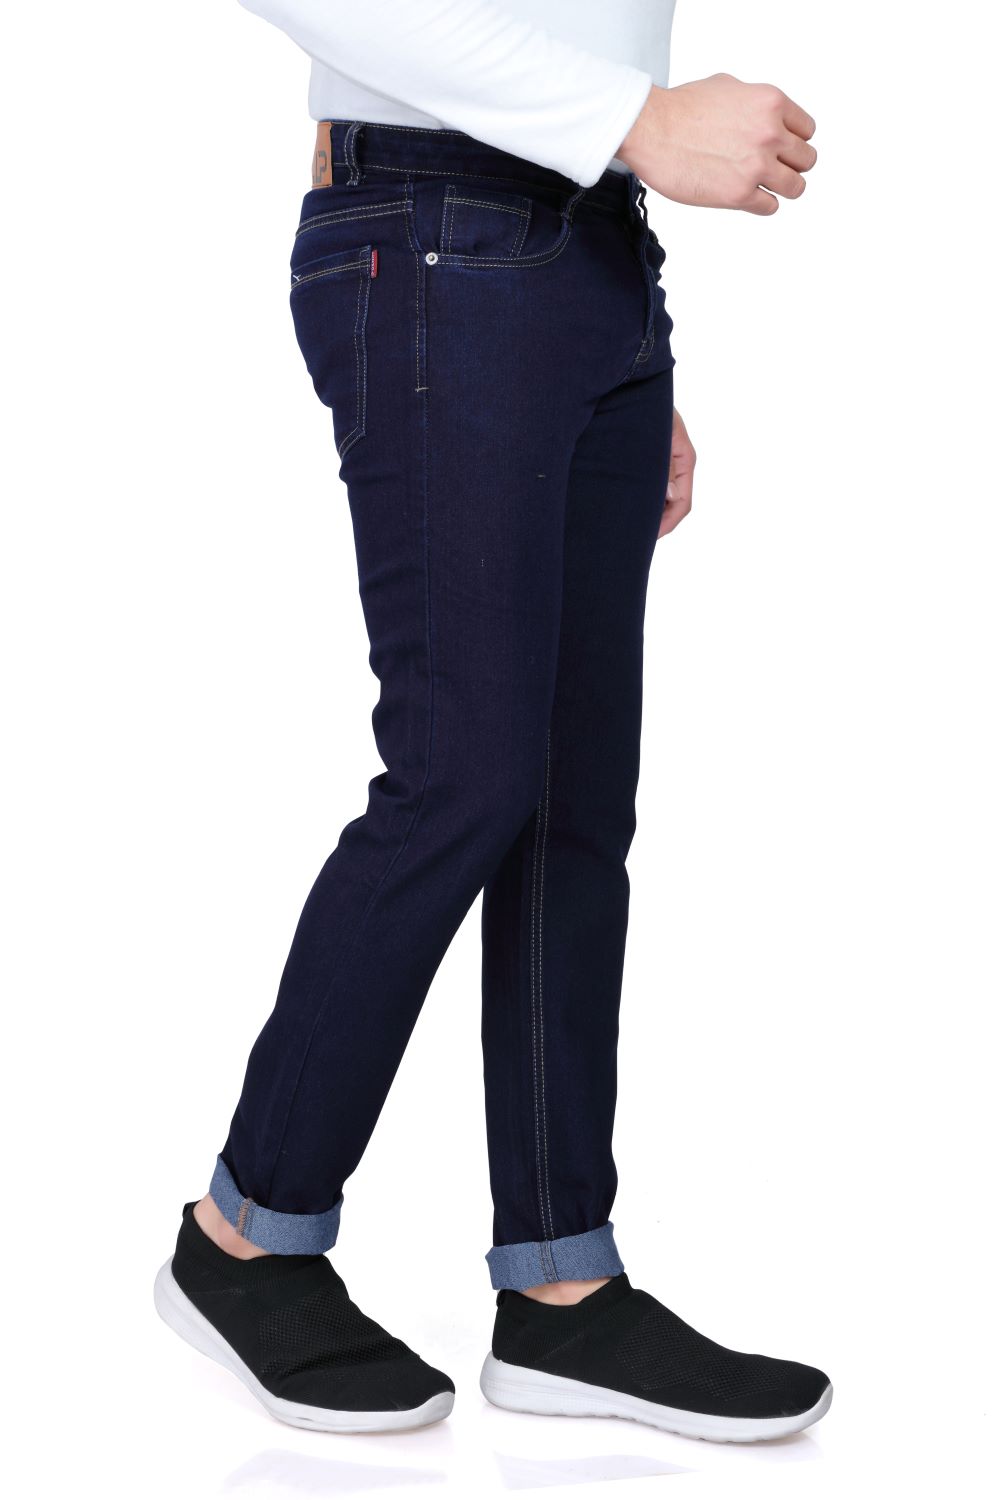 Navy Blue Denim Jeans